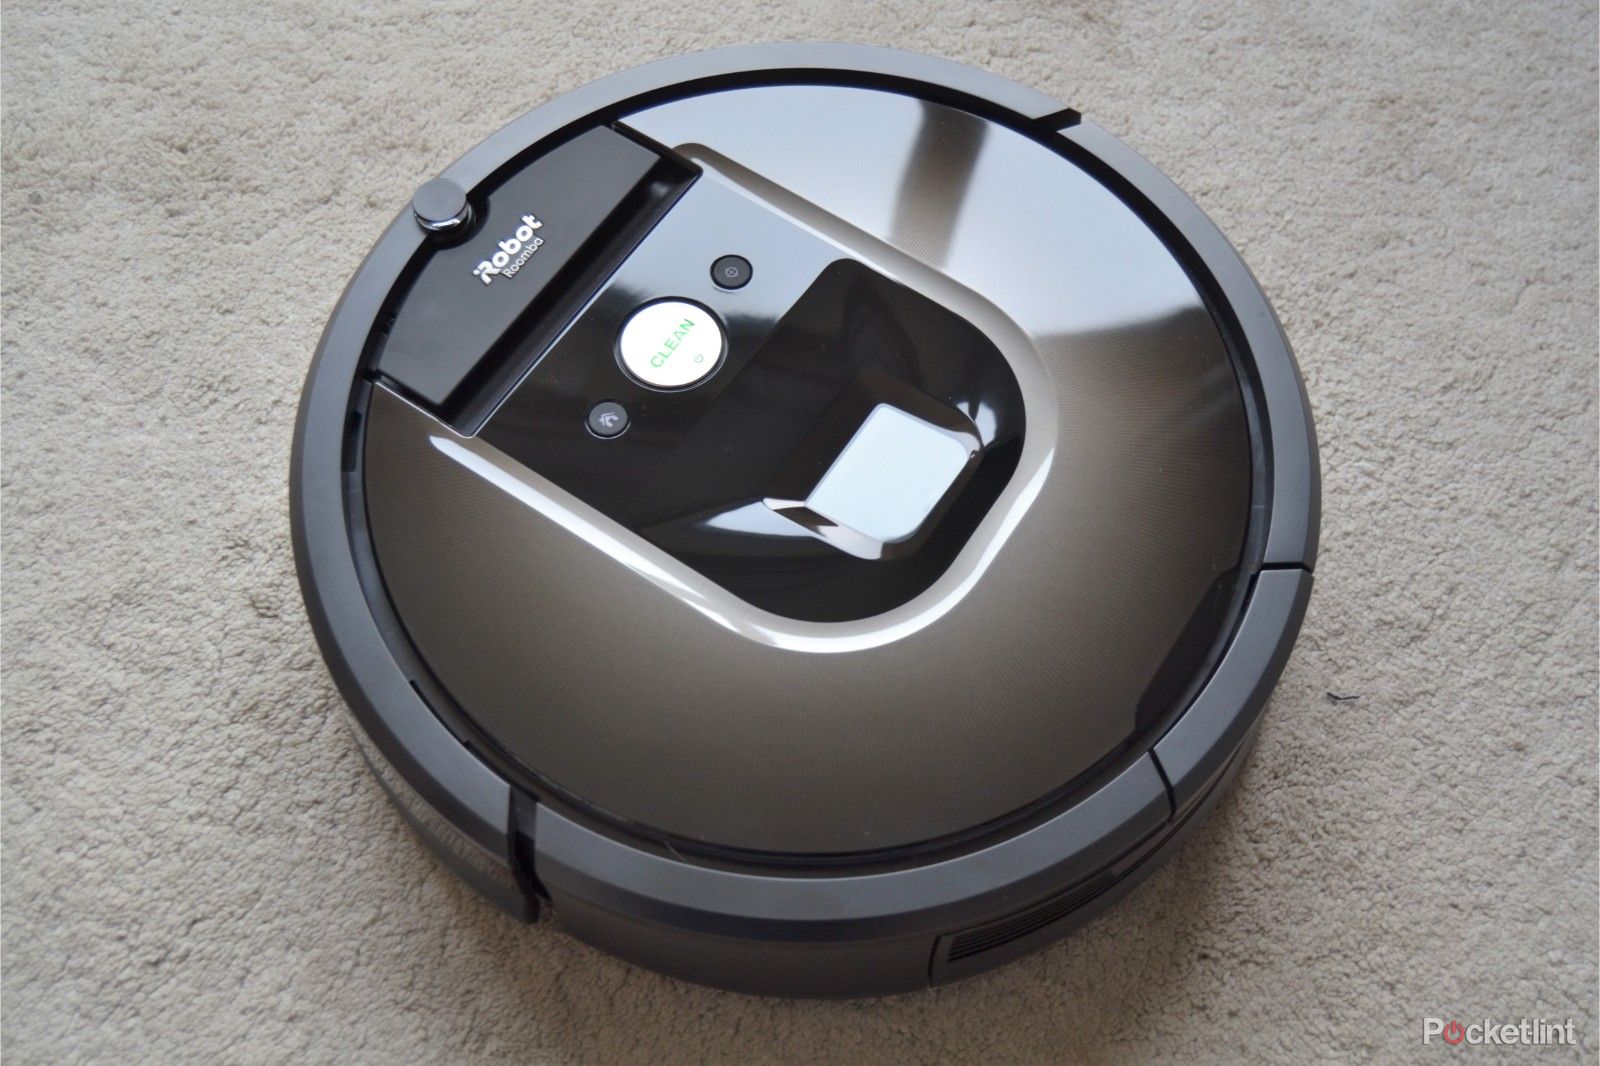 iRobot Roomba 980 robot vacuum review: The Alexa and Google Home